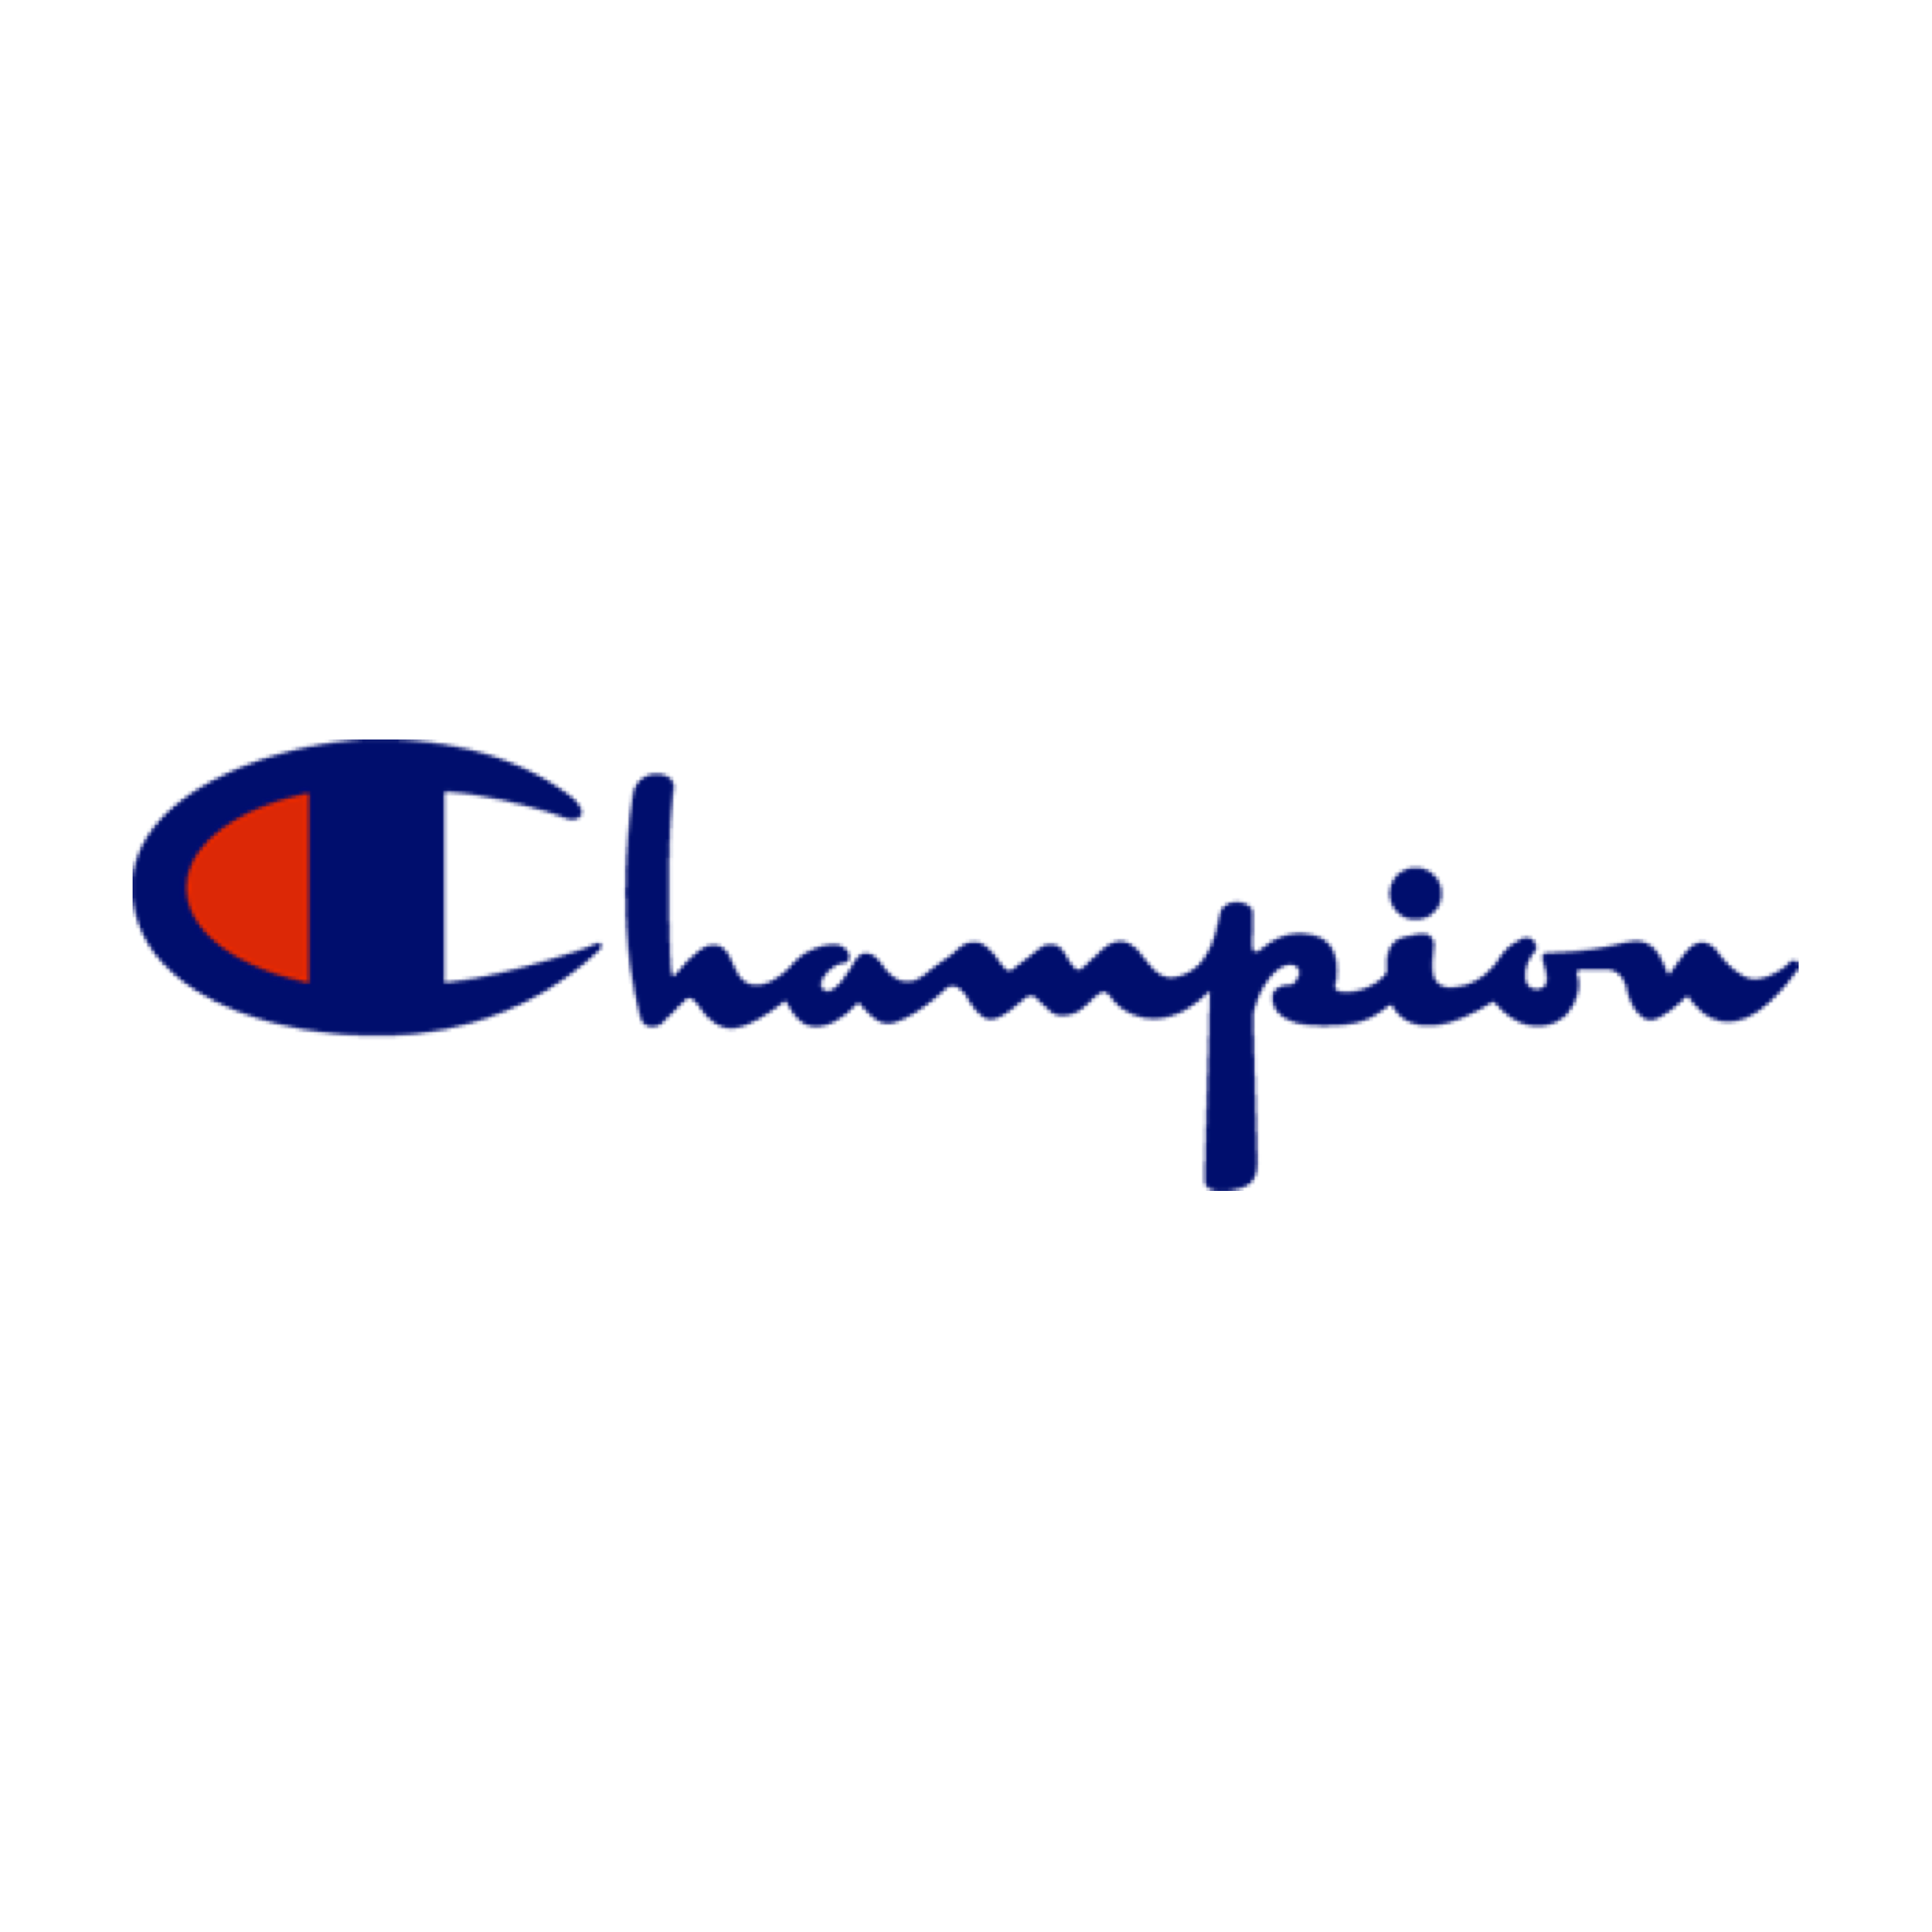 Champion Brand Logo - Champion | BRANDS in 2019 | Champion logo, Champion, Logos